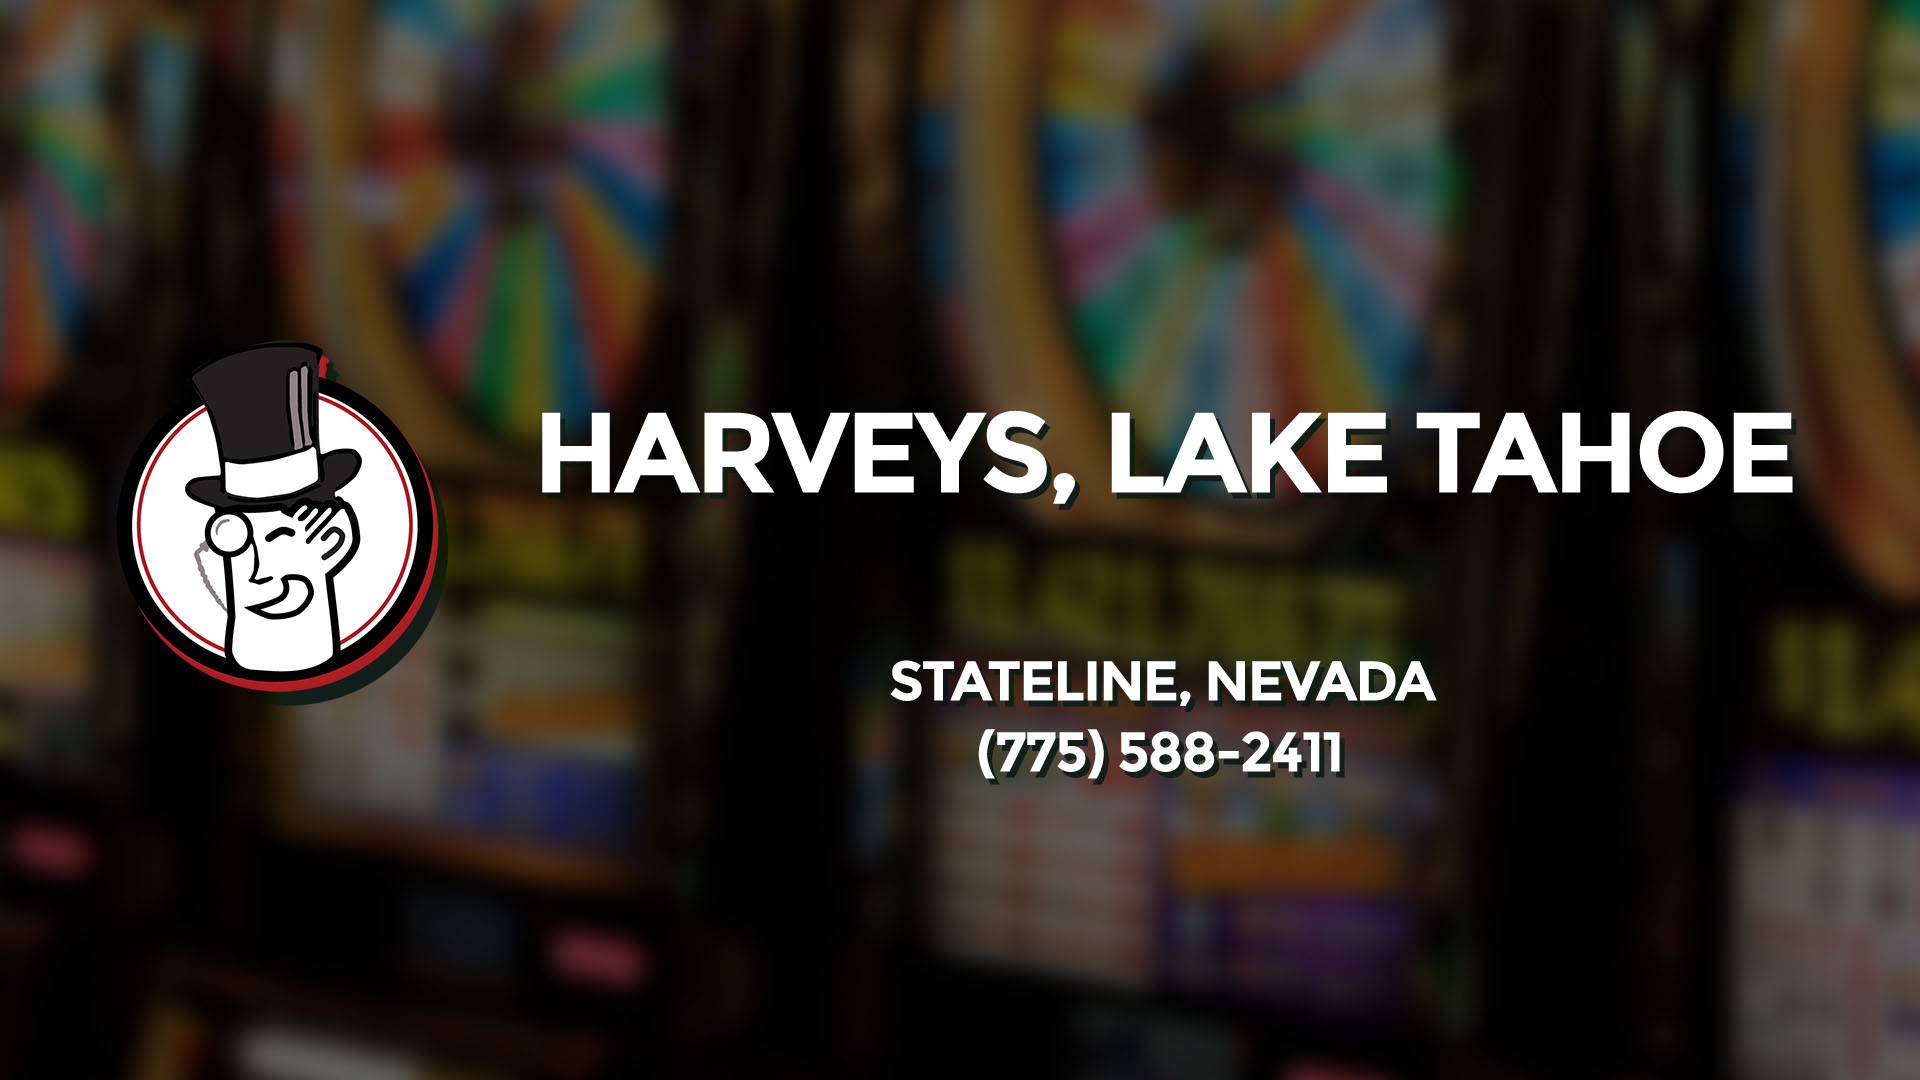 Harveys Casino Stateline Nevada